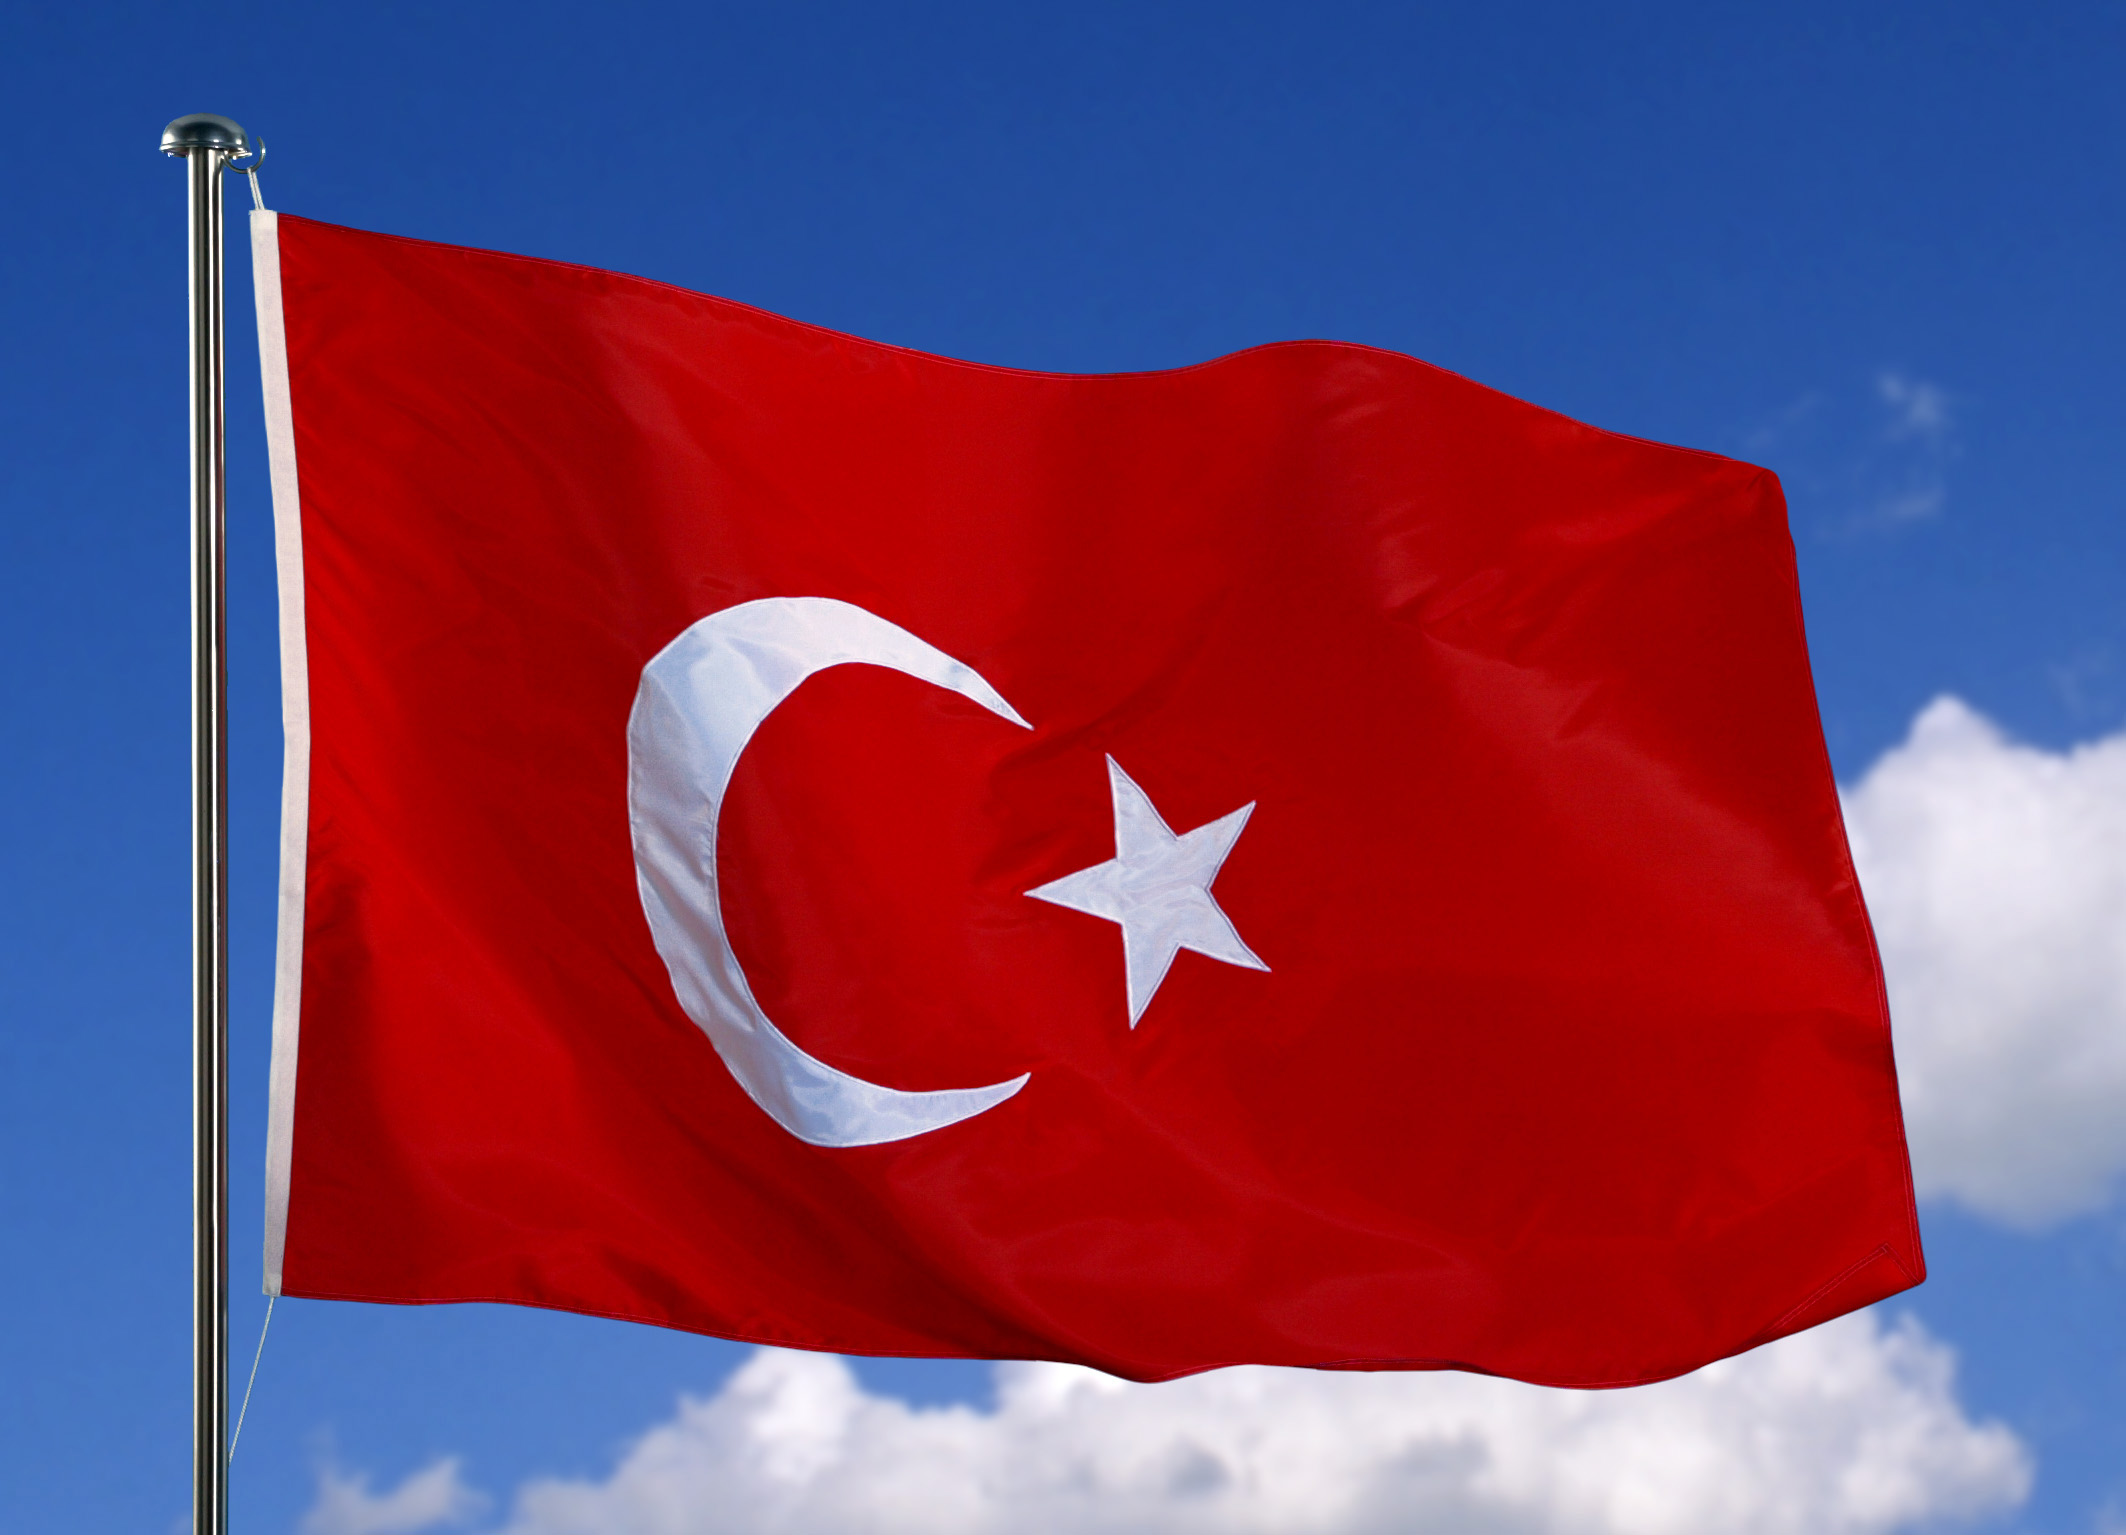 Turkish Journalist Could Face Prison Term over Tweet
